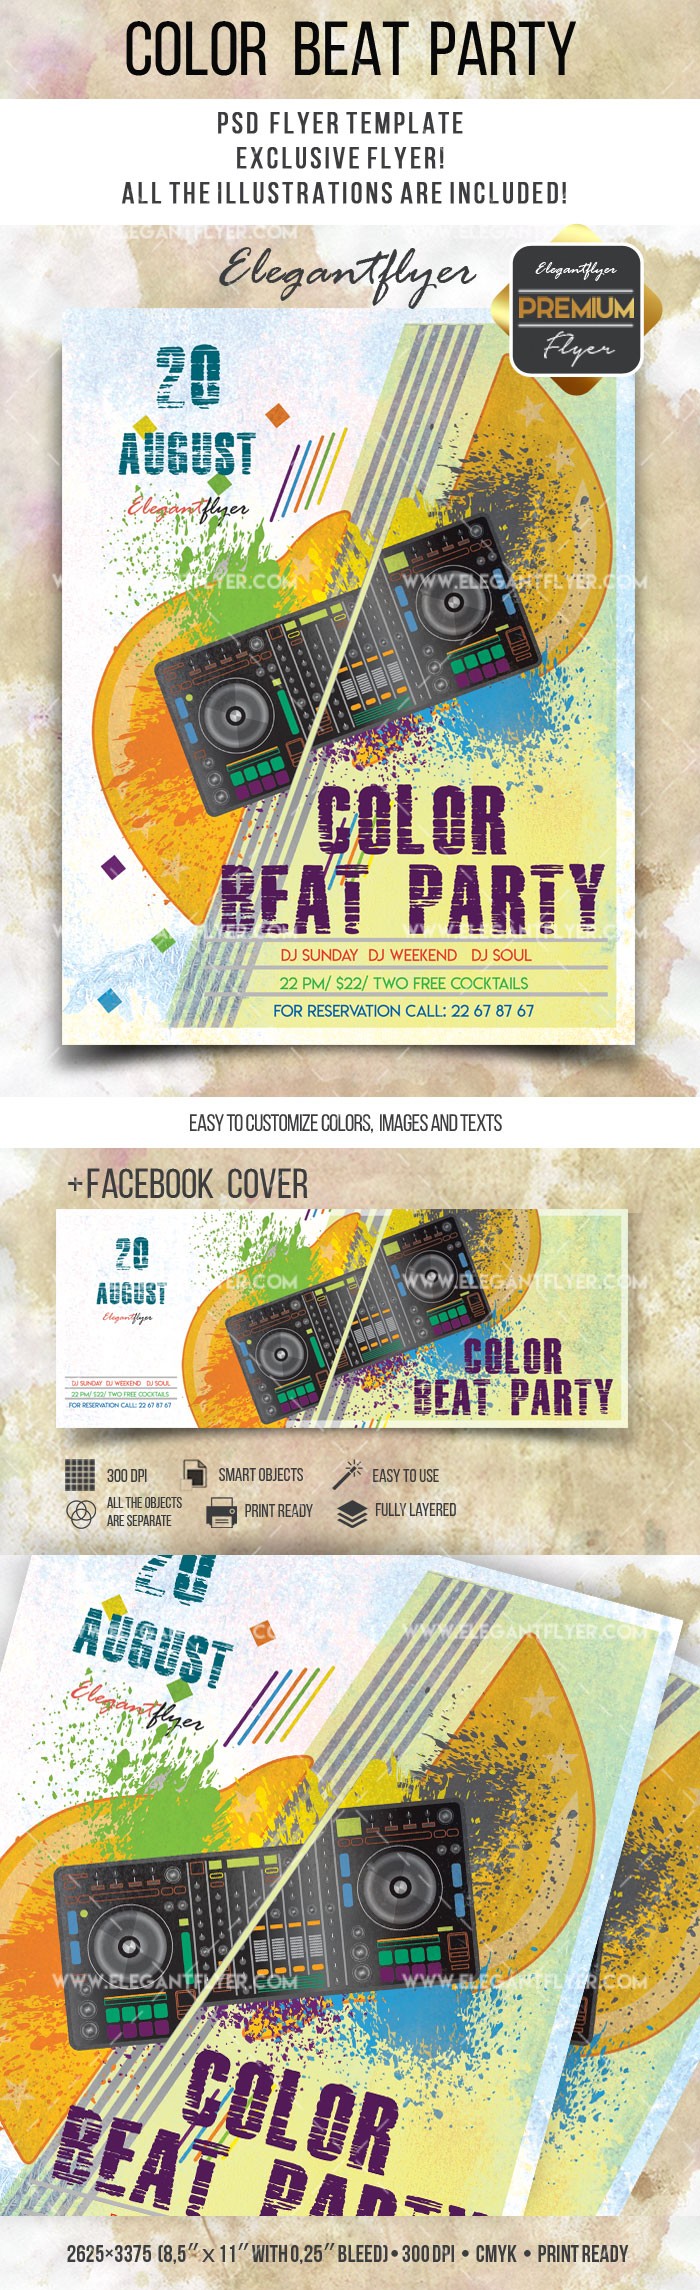 Color Beat Party by ElegantFlyer